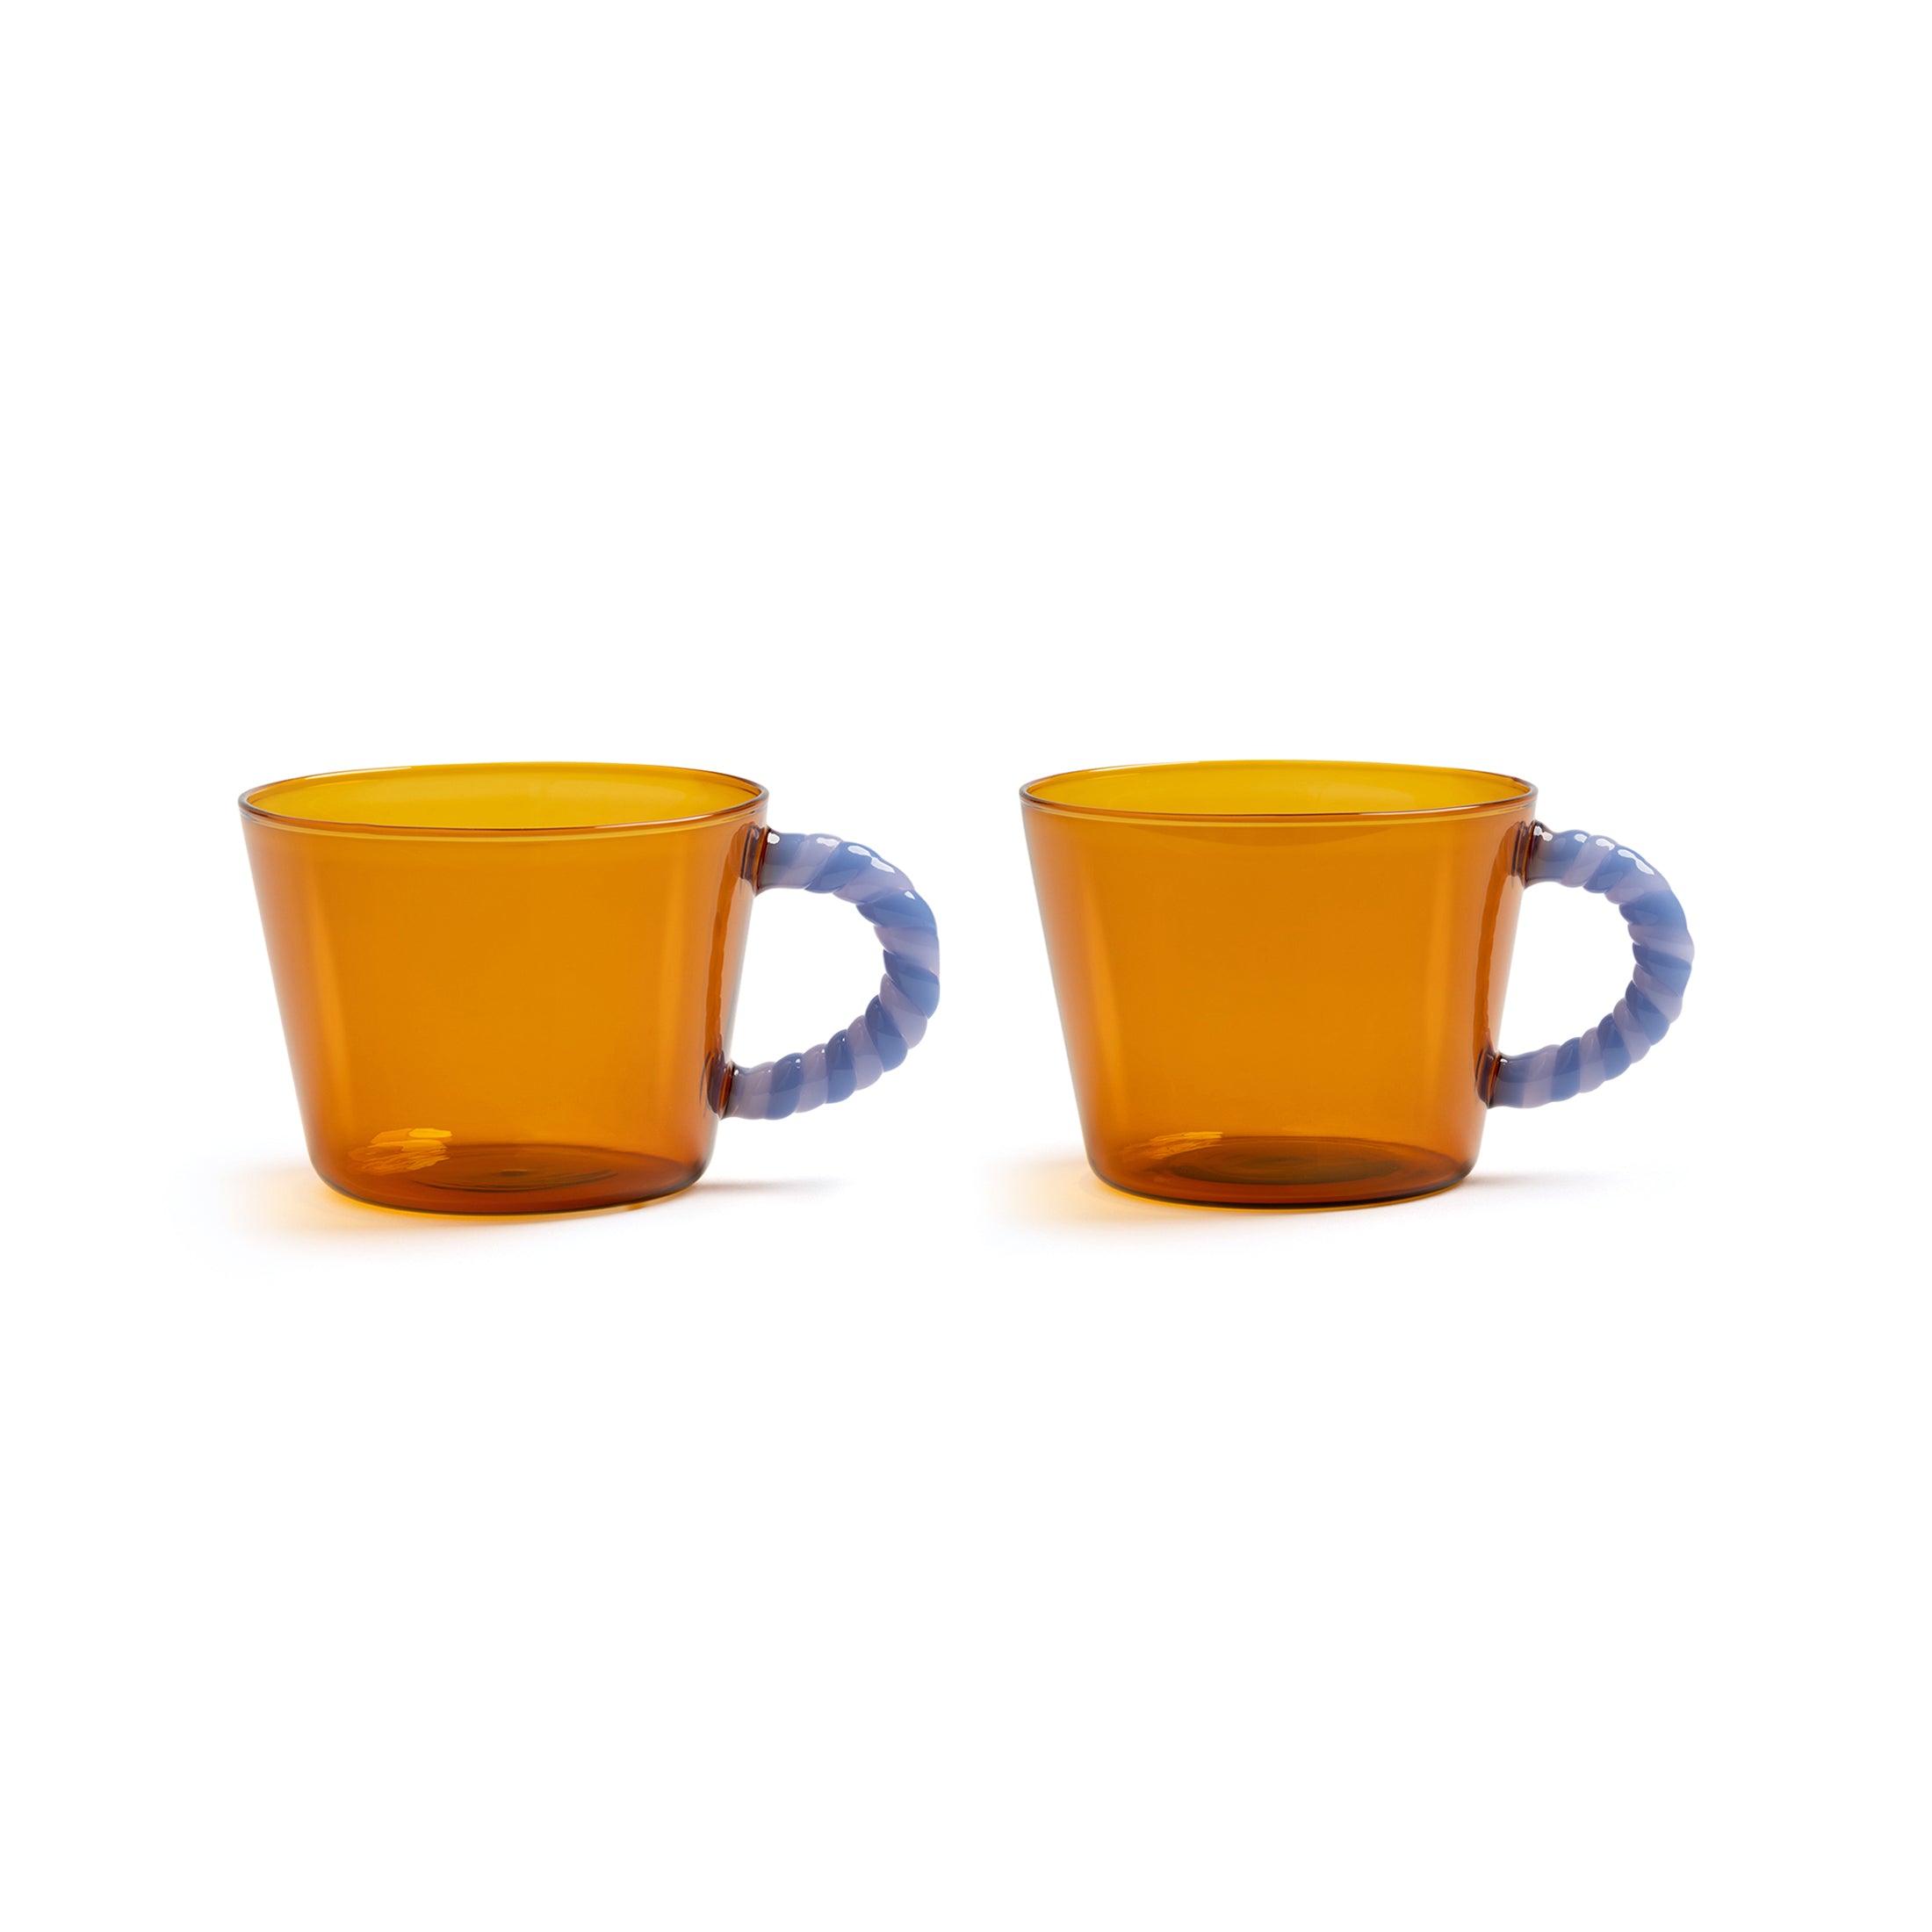 Herring & Bones - Concept Store Joyeux - &klevering - Tasses - Lot de 2 tasses en verre "Duet"